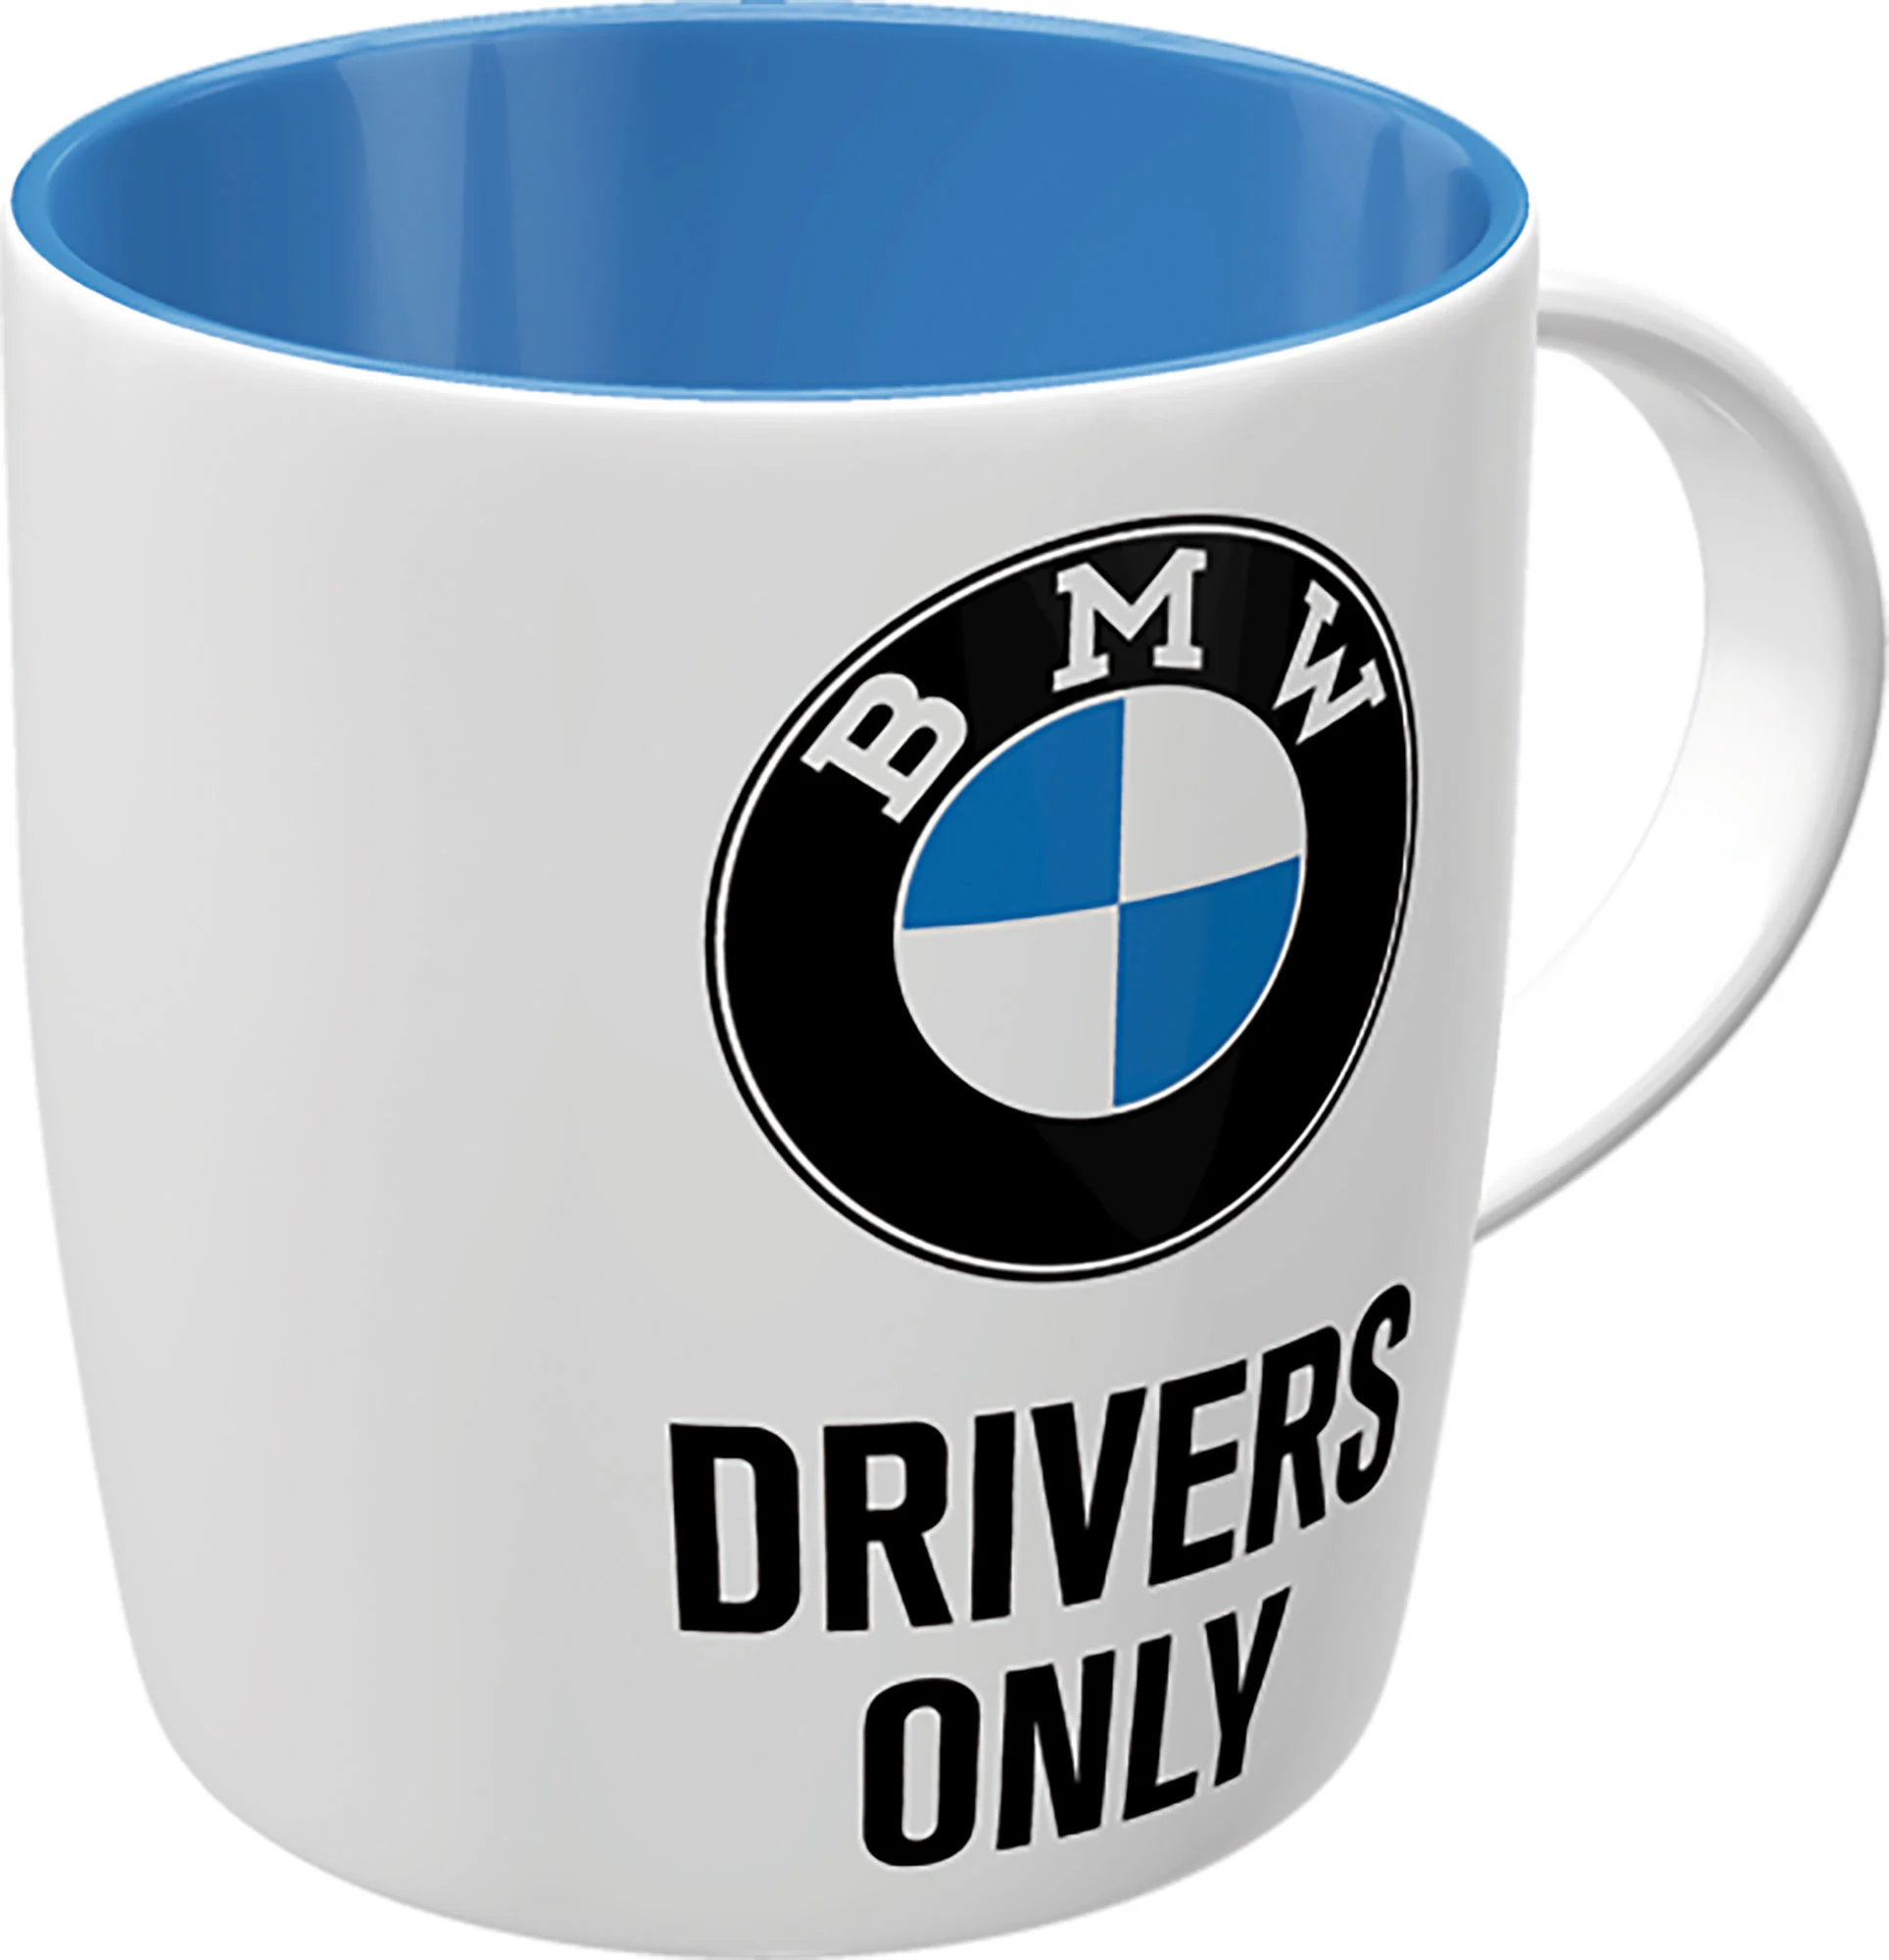 BMW BECHER *BMW DRIVERS ONLY* INHALT: 300 ML, KERAMIK